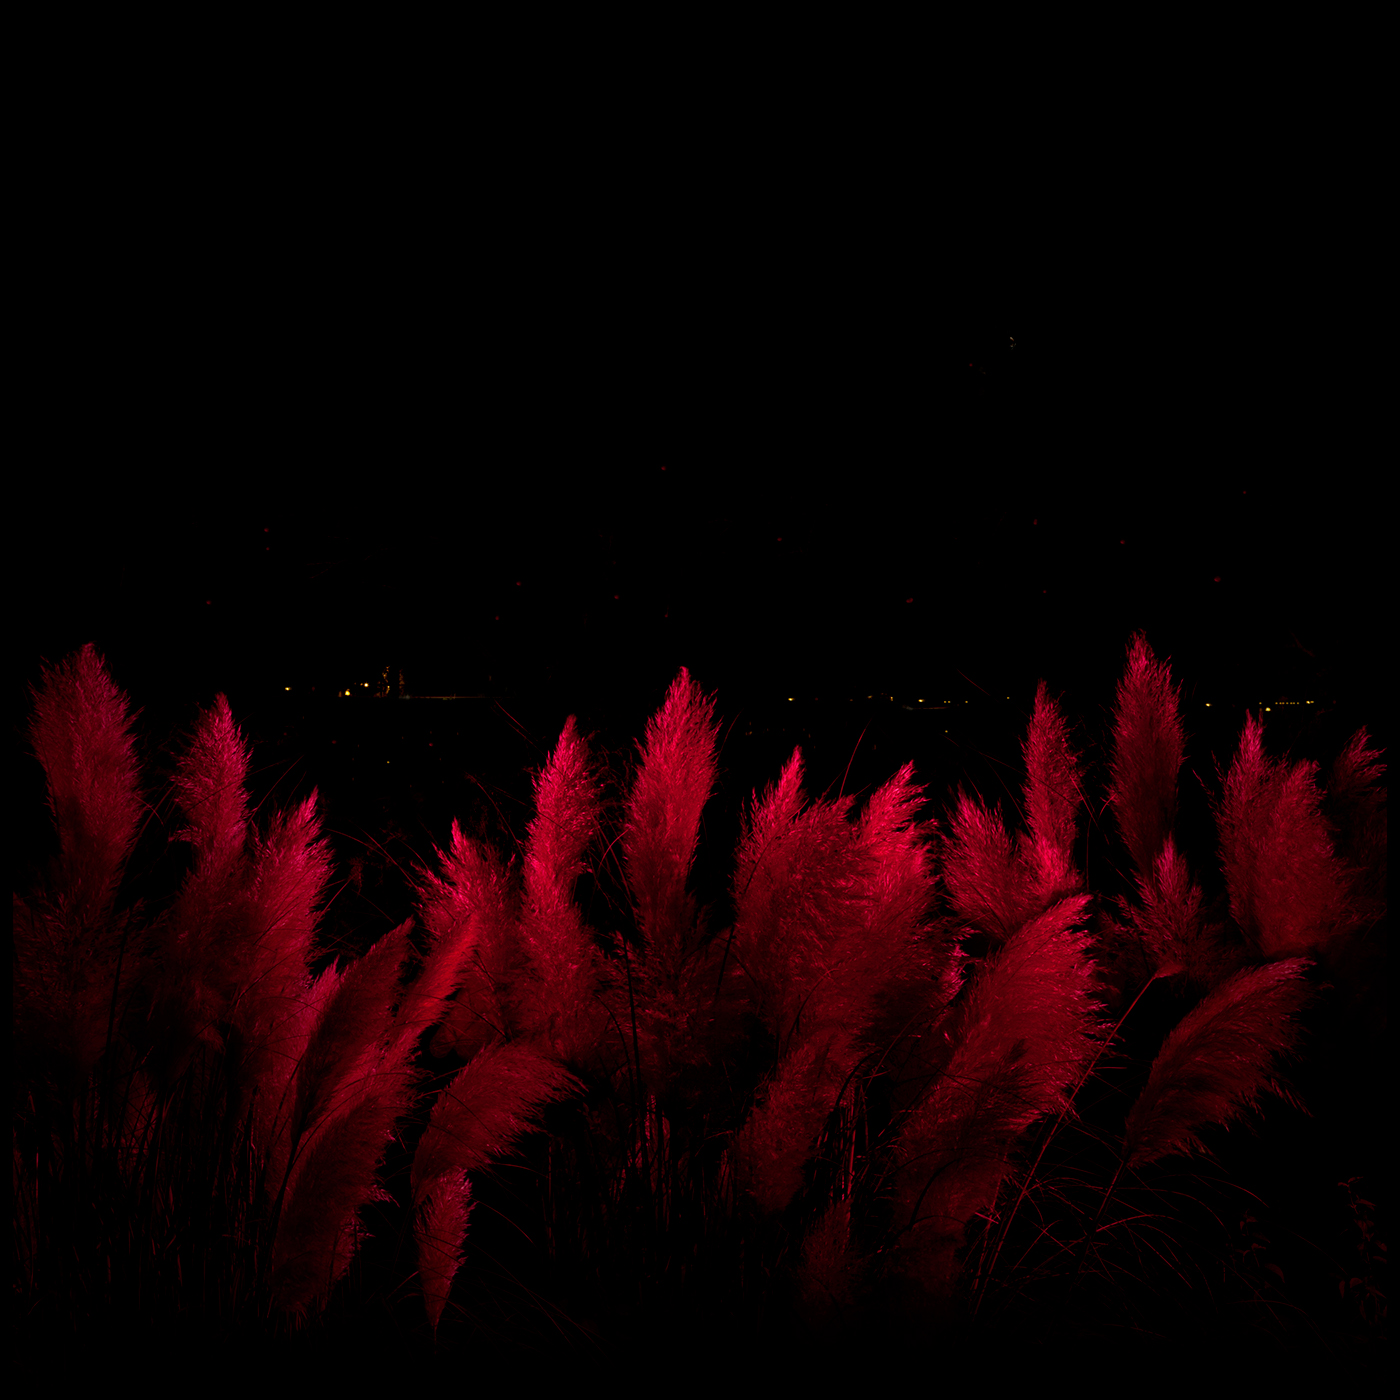 neil young selfportrait red colors death Landscape night black reserch portraits